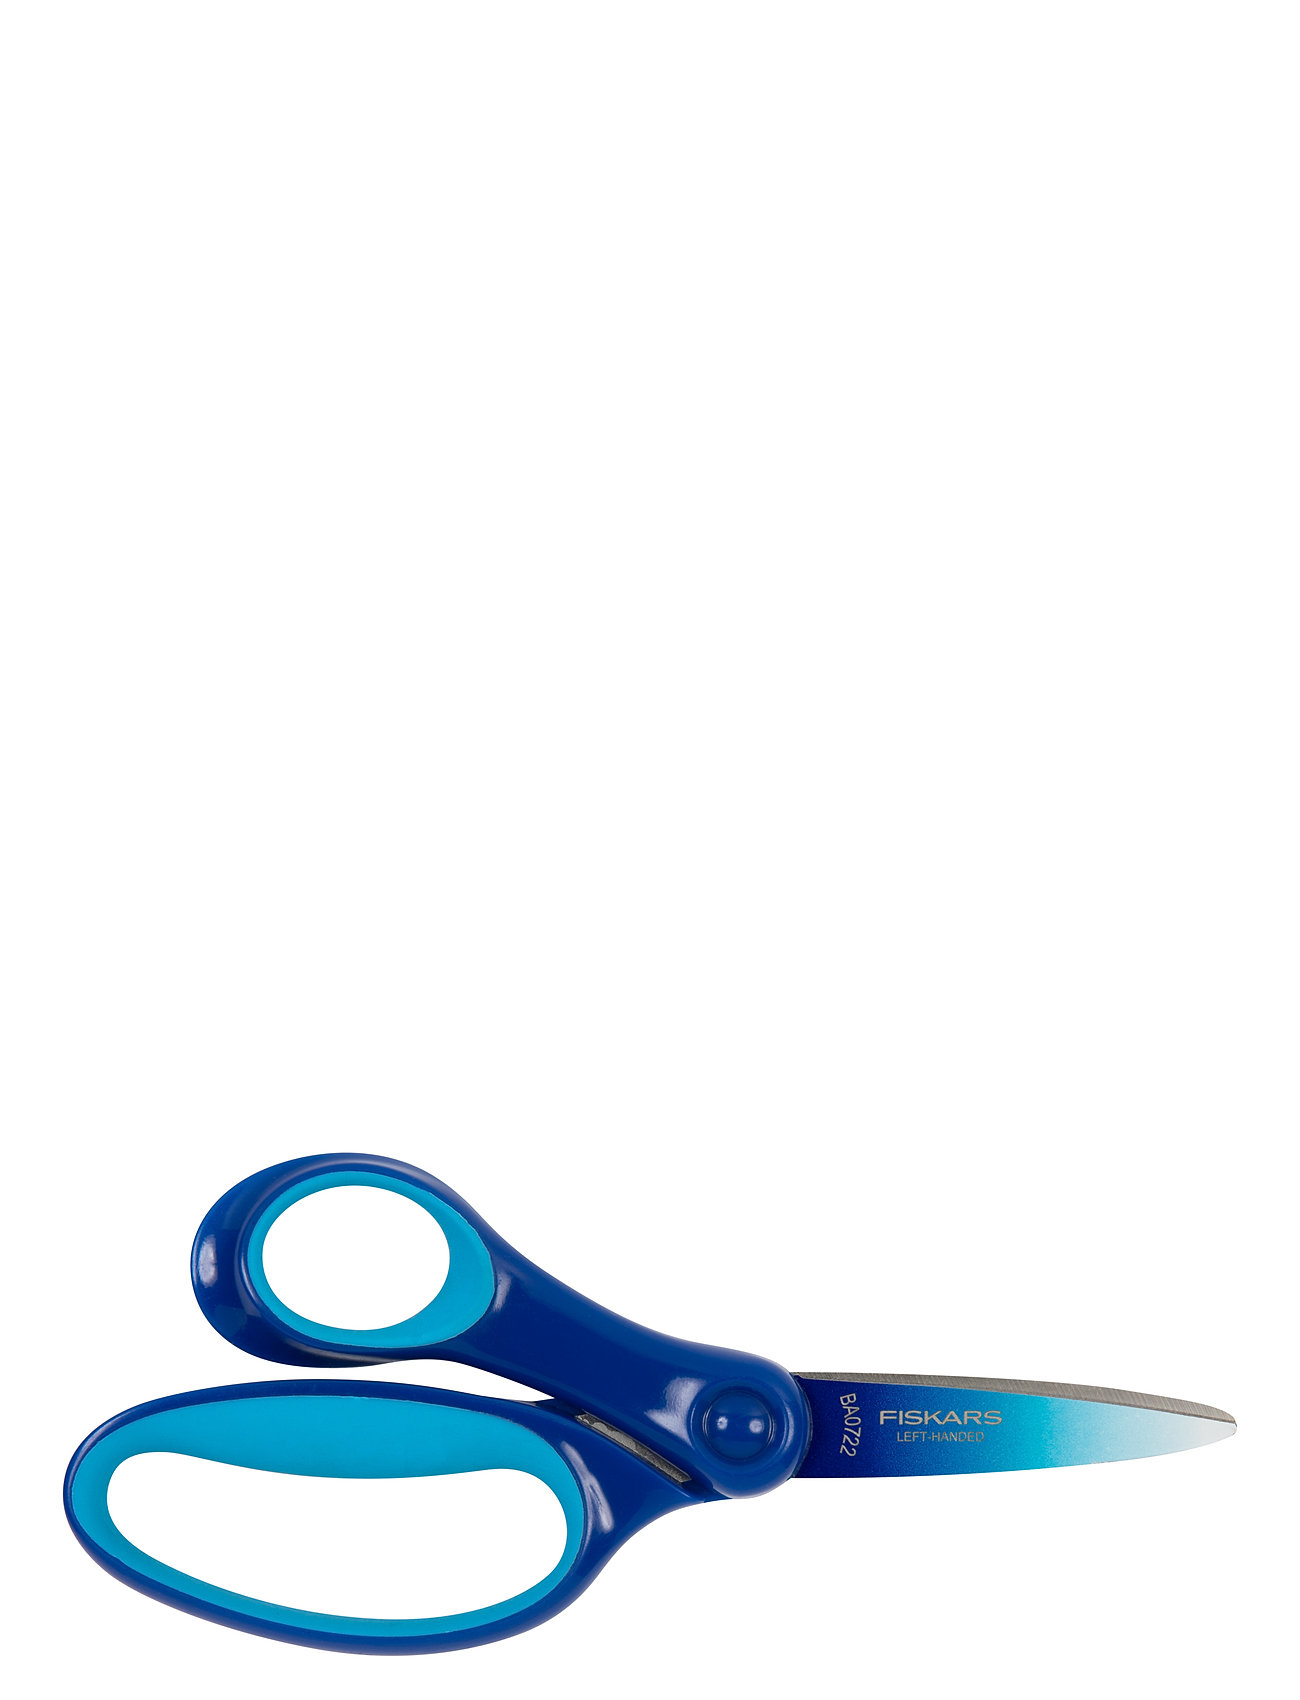 Fiskars • Big kids Scissors left-handed Ombre Blue 15cm for +8